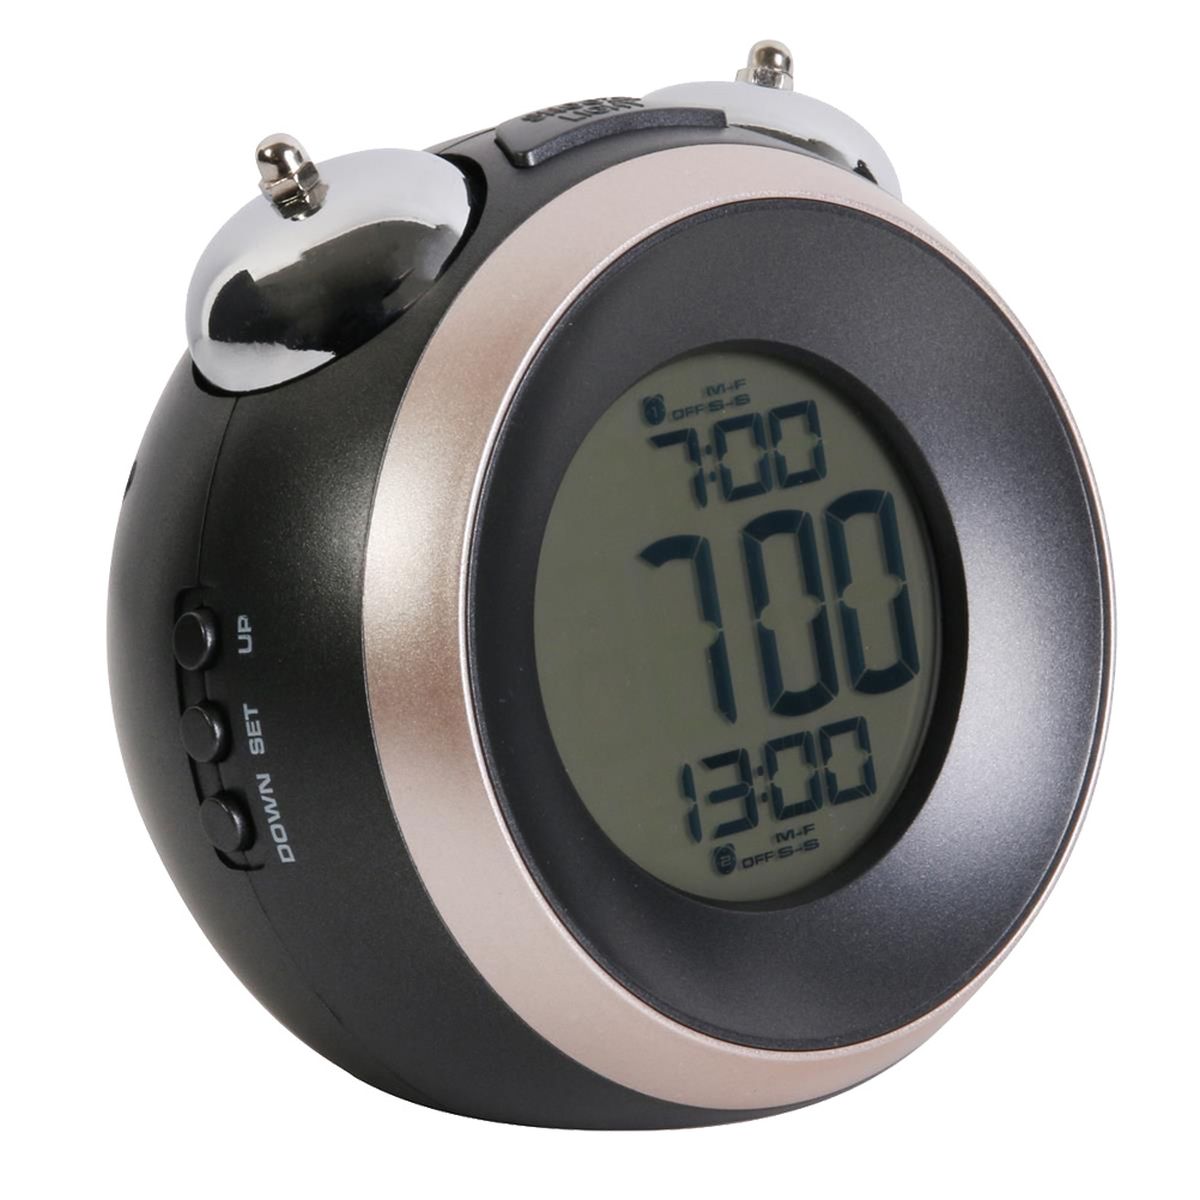 Small round grey alarm clock